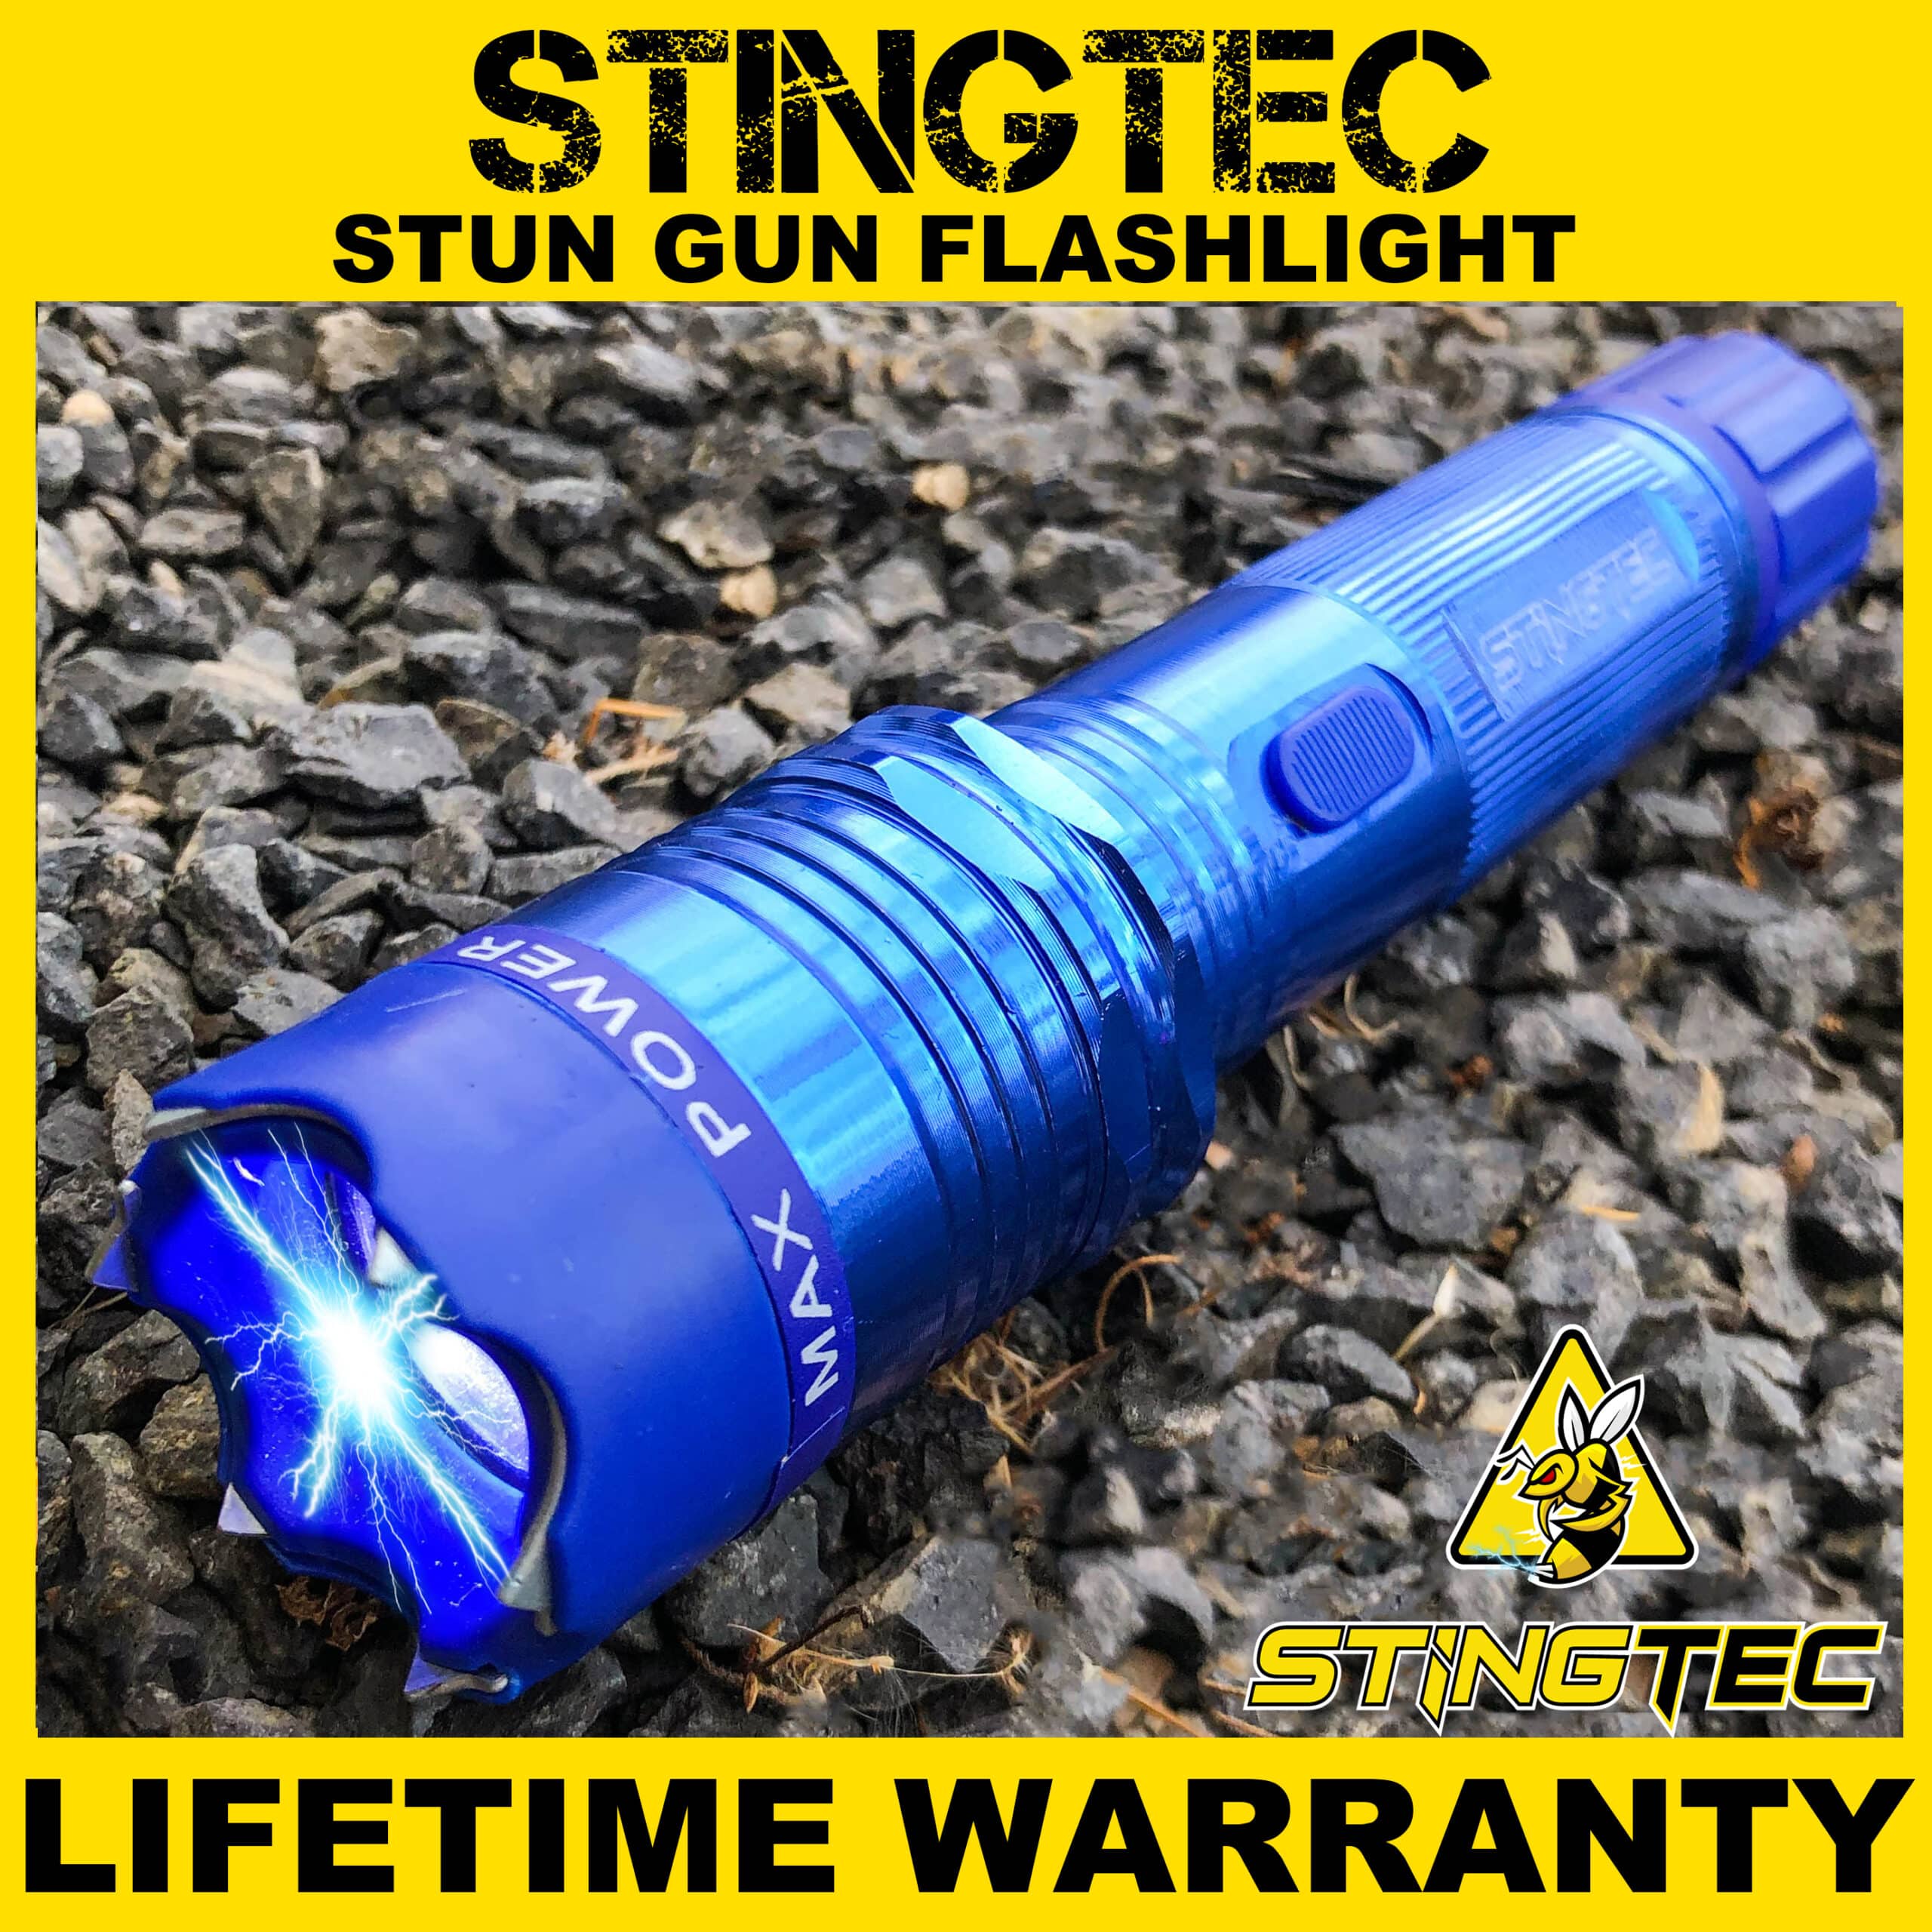 STINGTEC BLUE METAL Stun Gun MAX POWER Rechargeable LED Flashlight w/ Case NEW